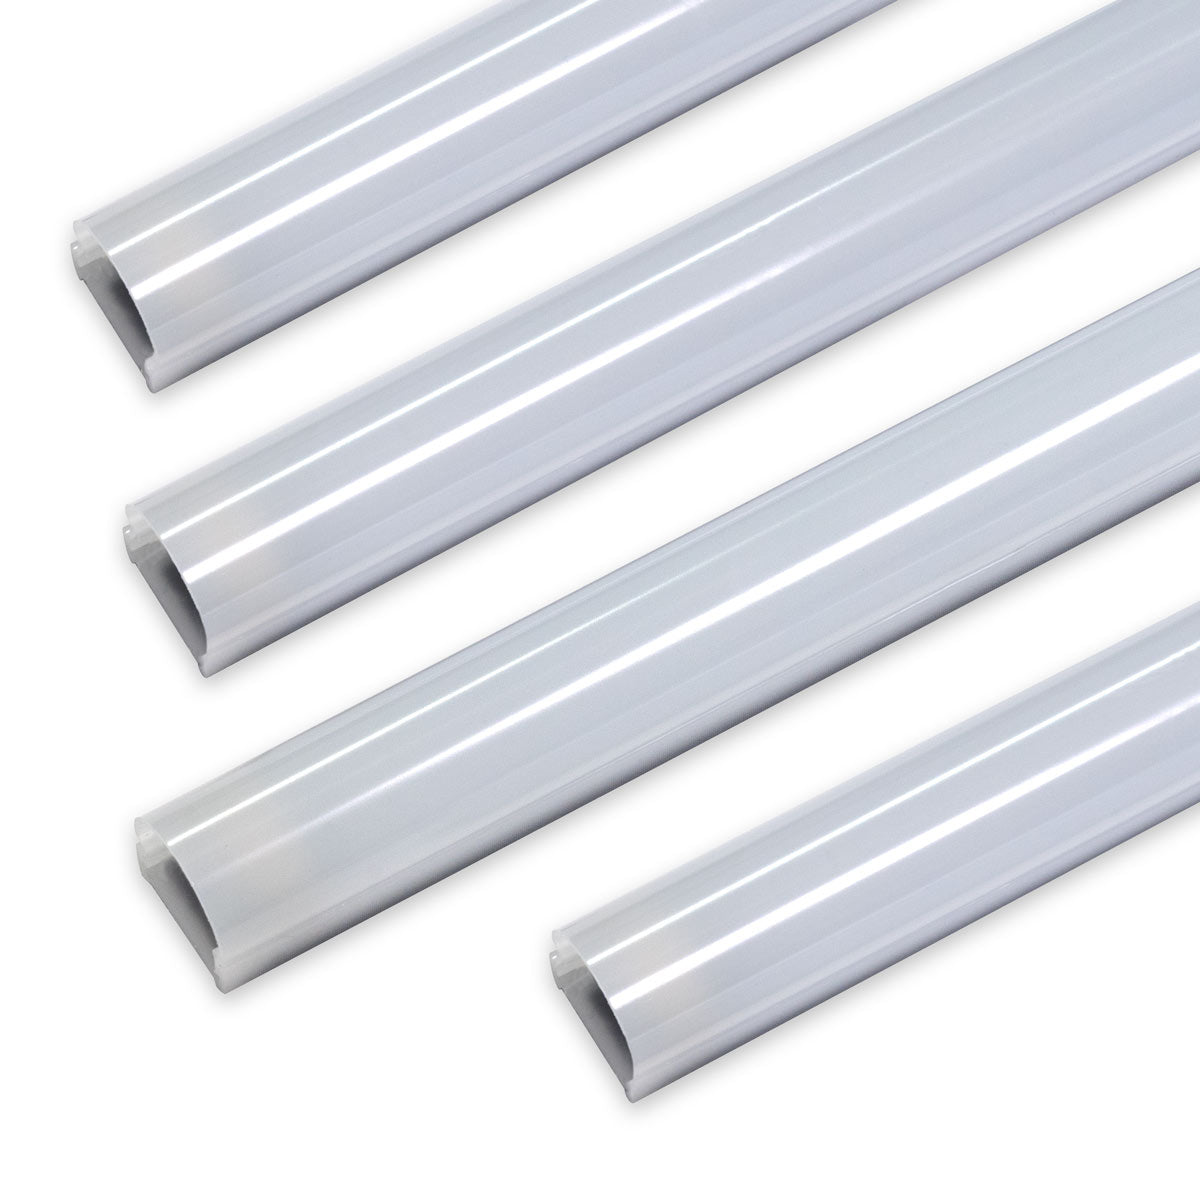 3 types of linear LED tubes - The Retrofit Companies, Inc.